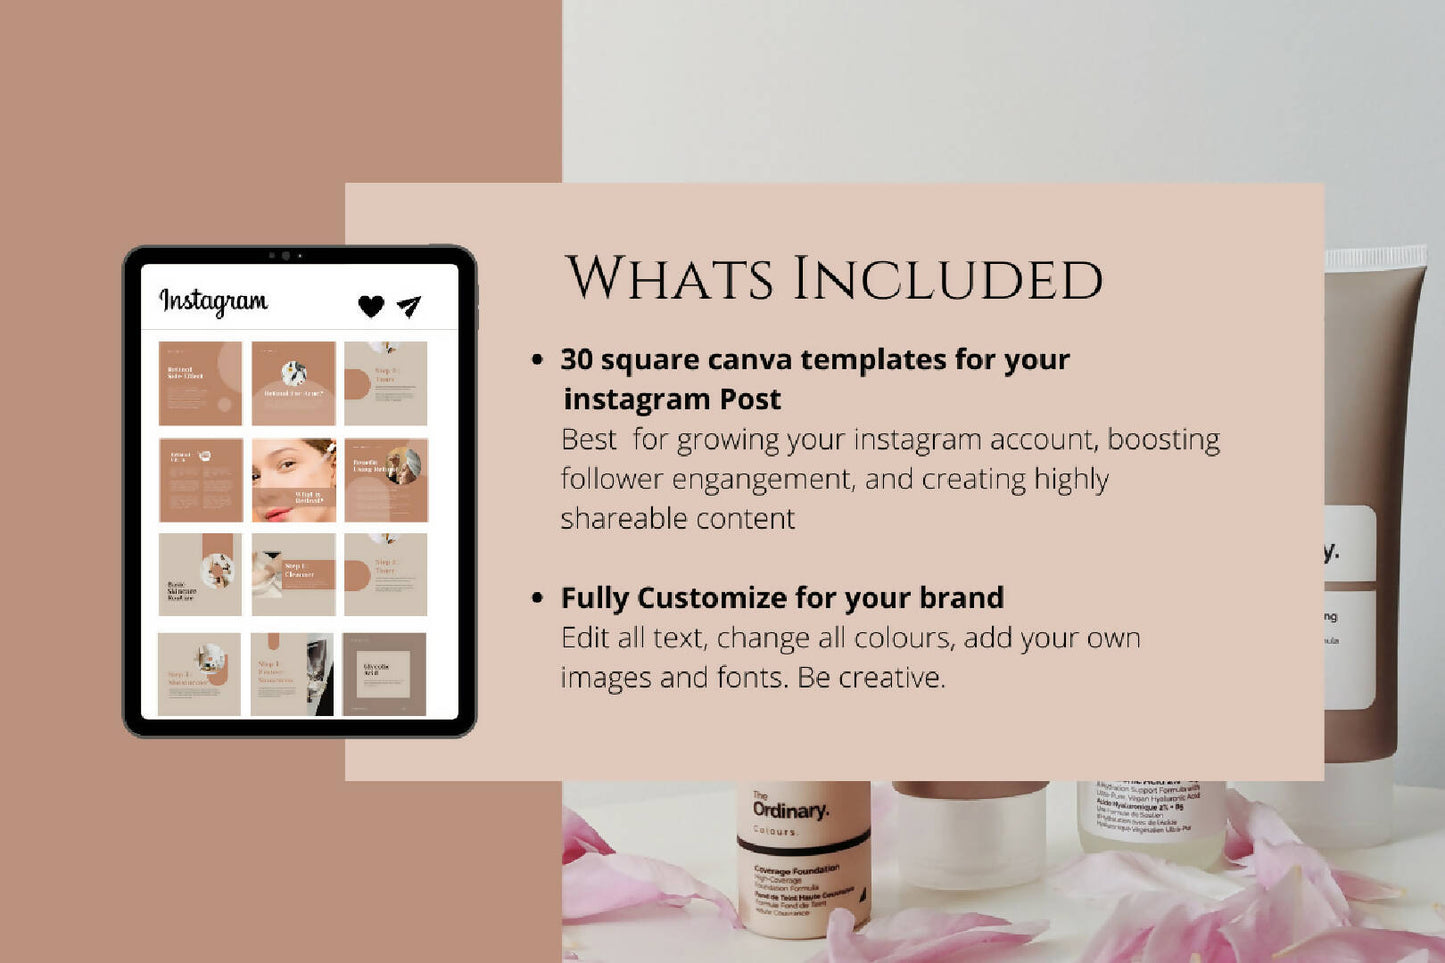 30 Skincare Carousel Templates for Social Media